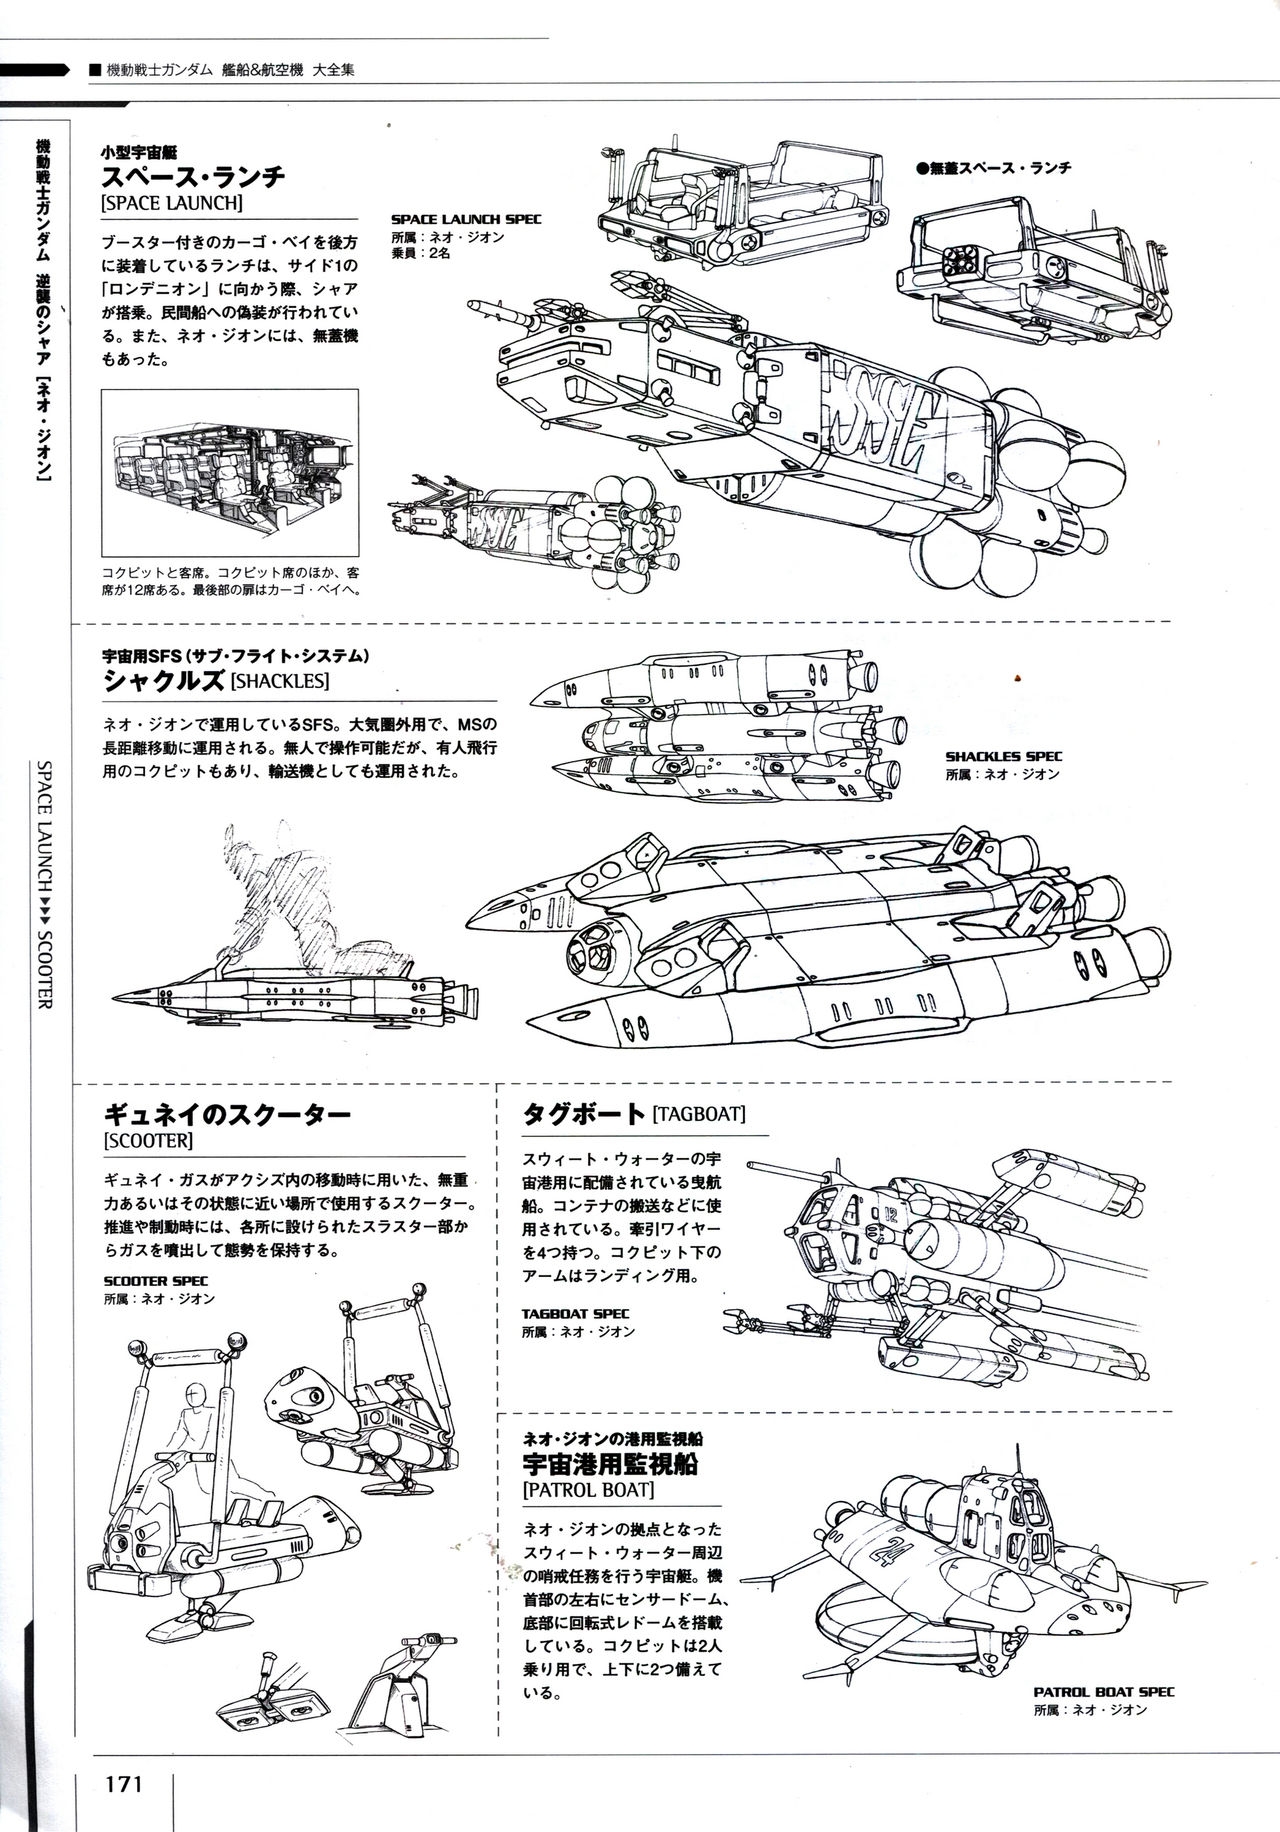 Mobile Suit Gundam - Ship & Aerospace Plane Encyclopedia - Revised Edition 176